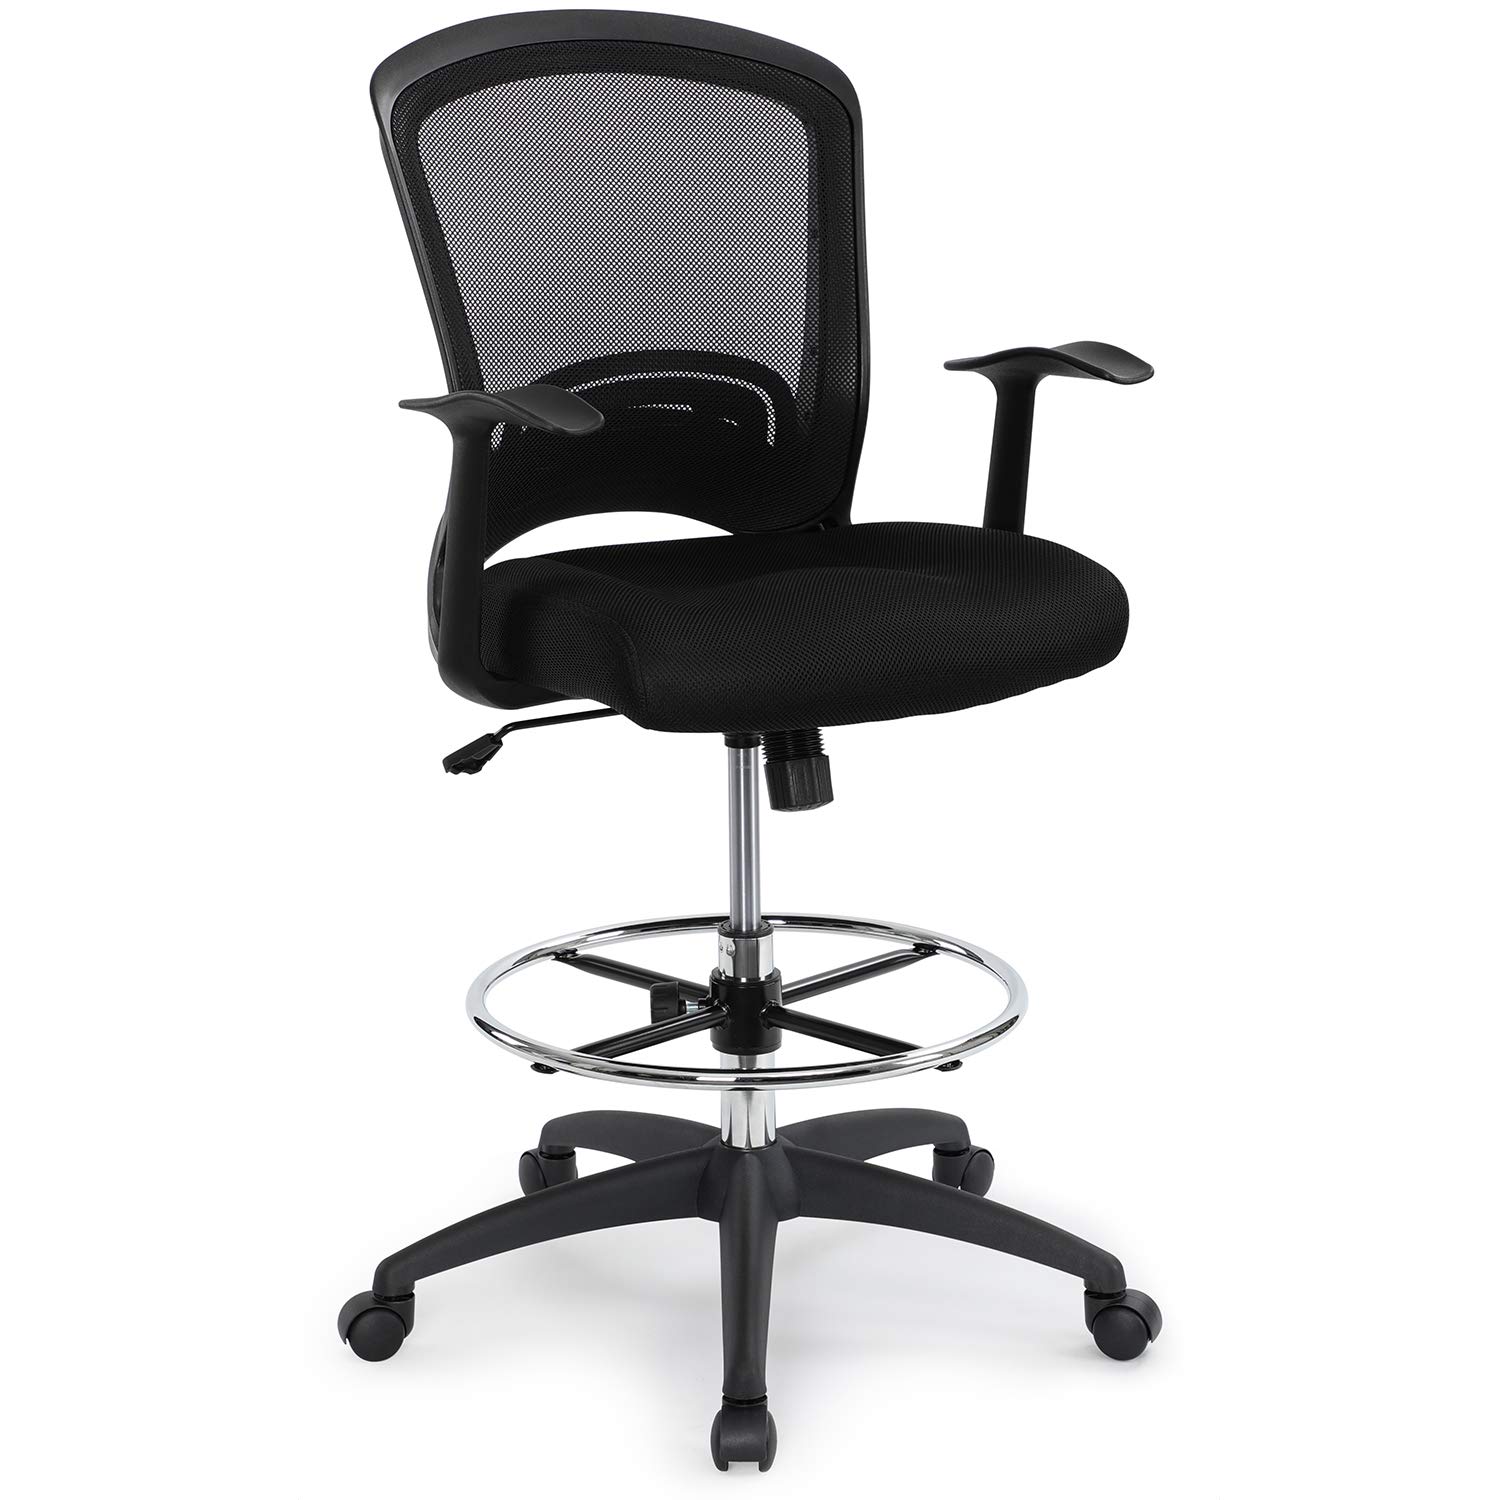 Chairman Ergonomic Mid-Back Adjustable Drafting Chair